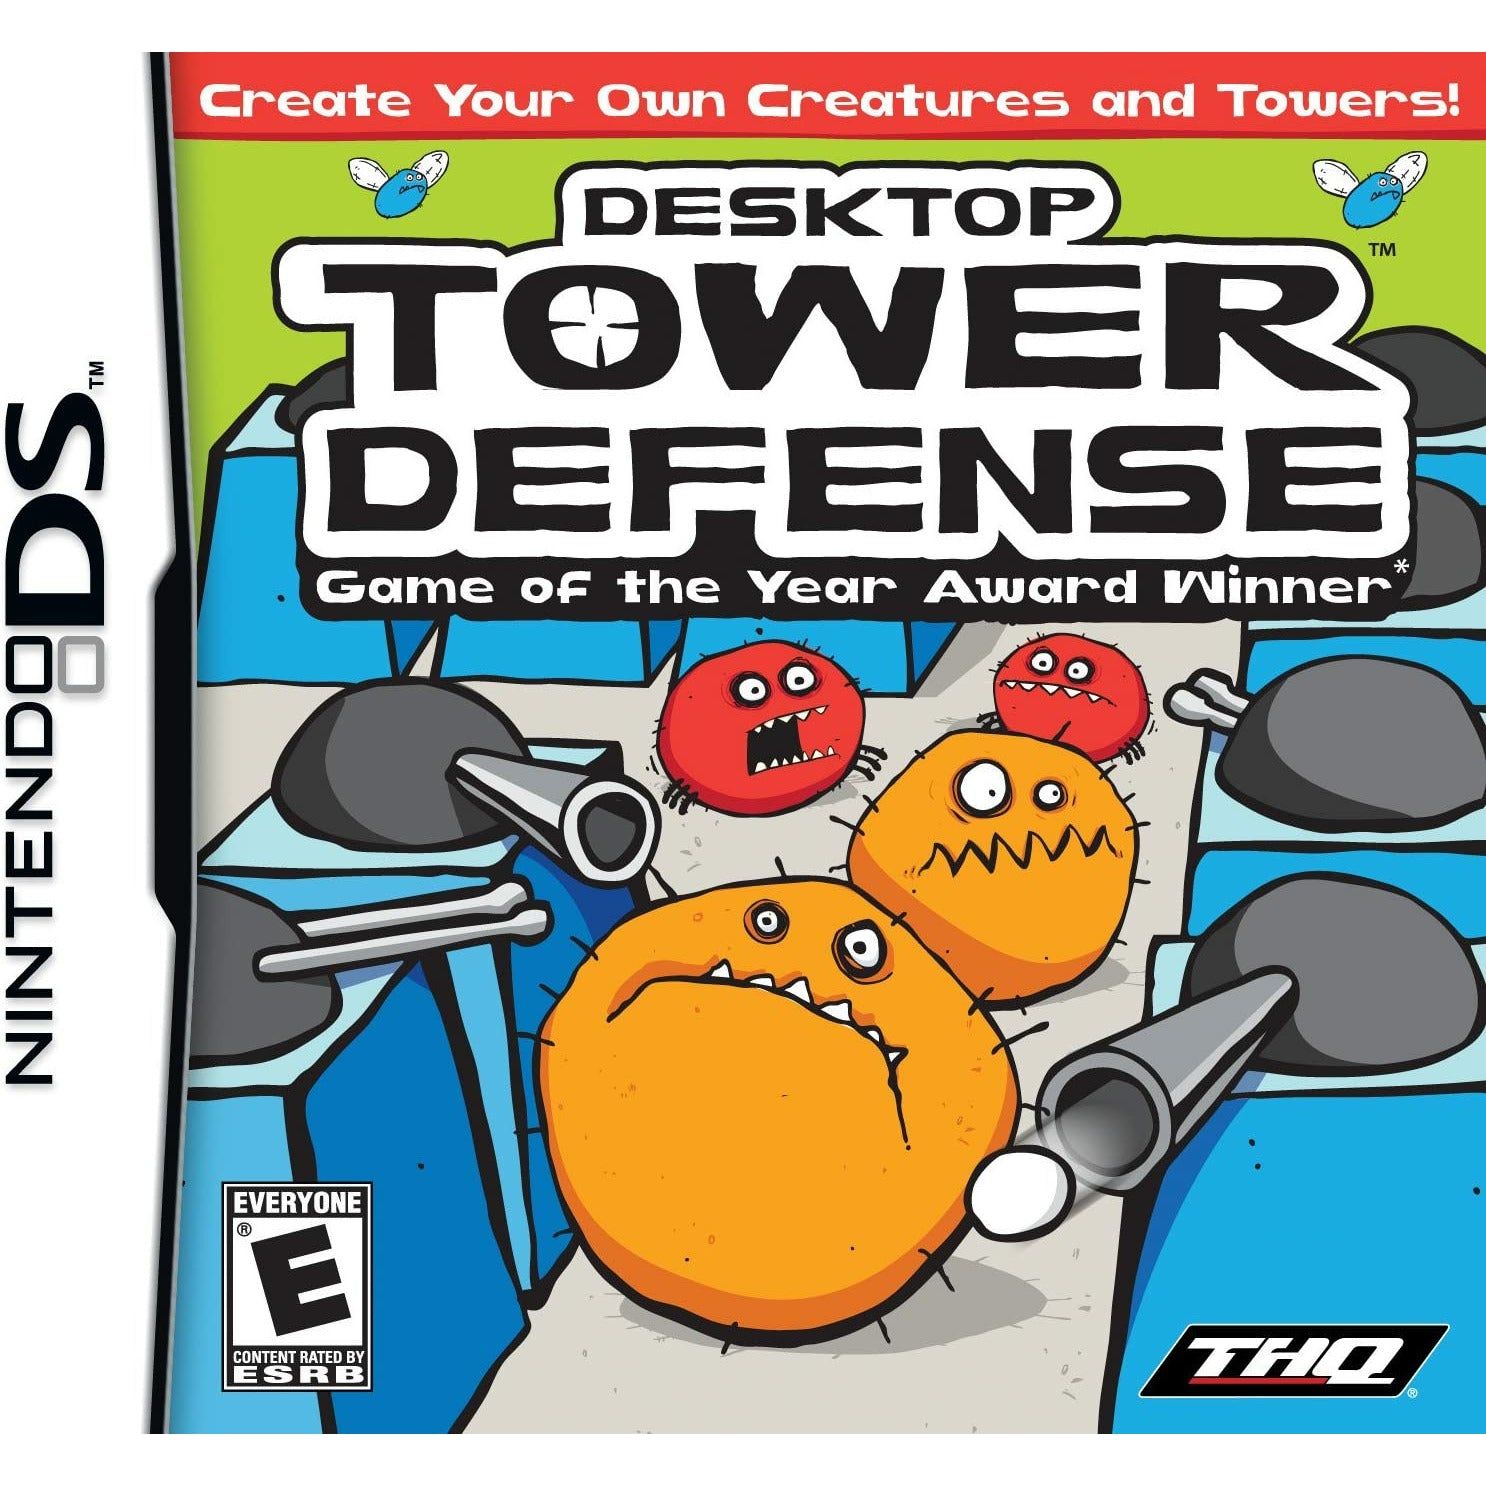 DS - Desktop Tower Defense (In Case)